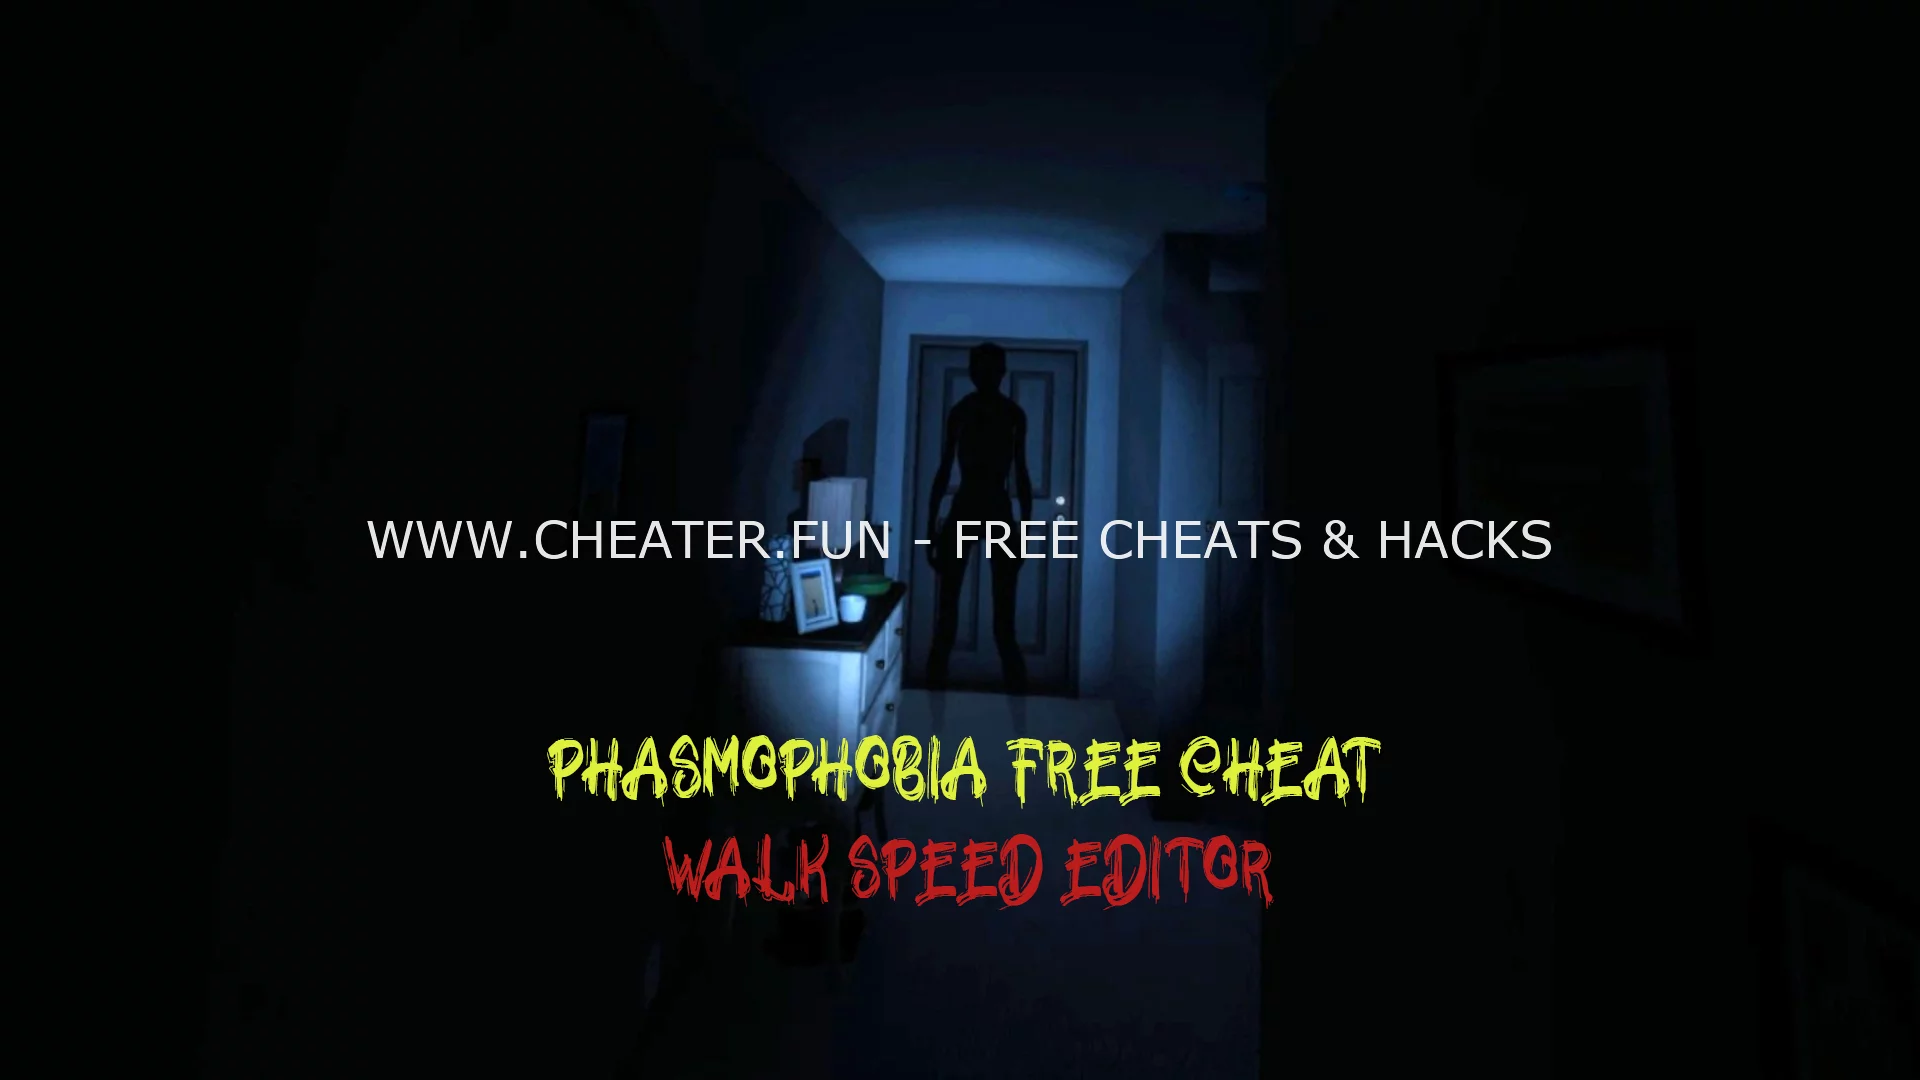 Phasmophobia Free Cheat - Walk speed editor